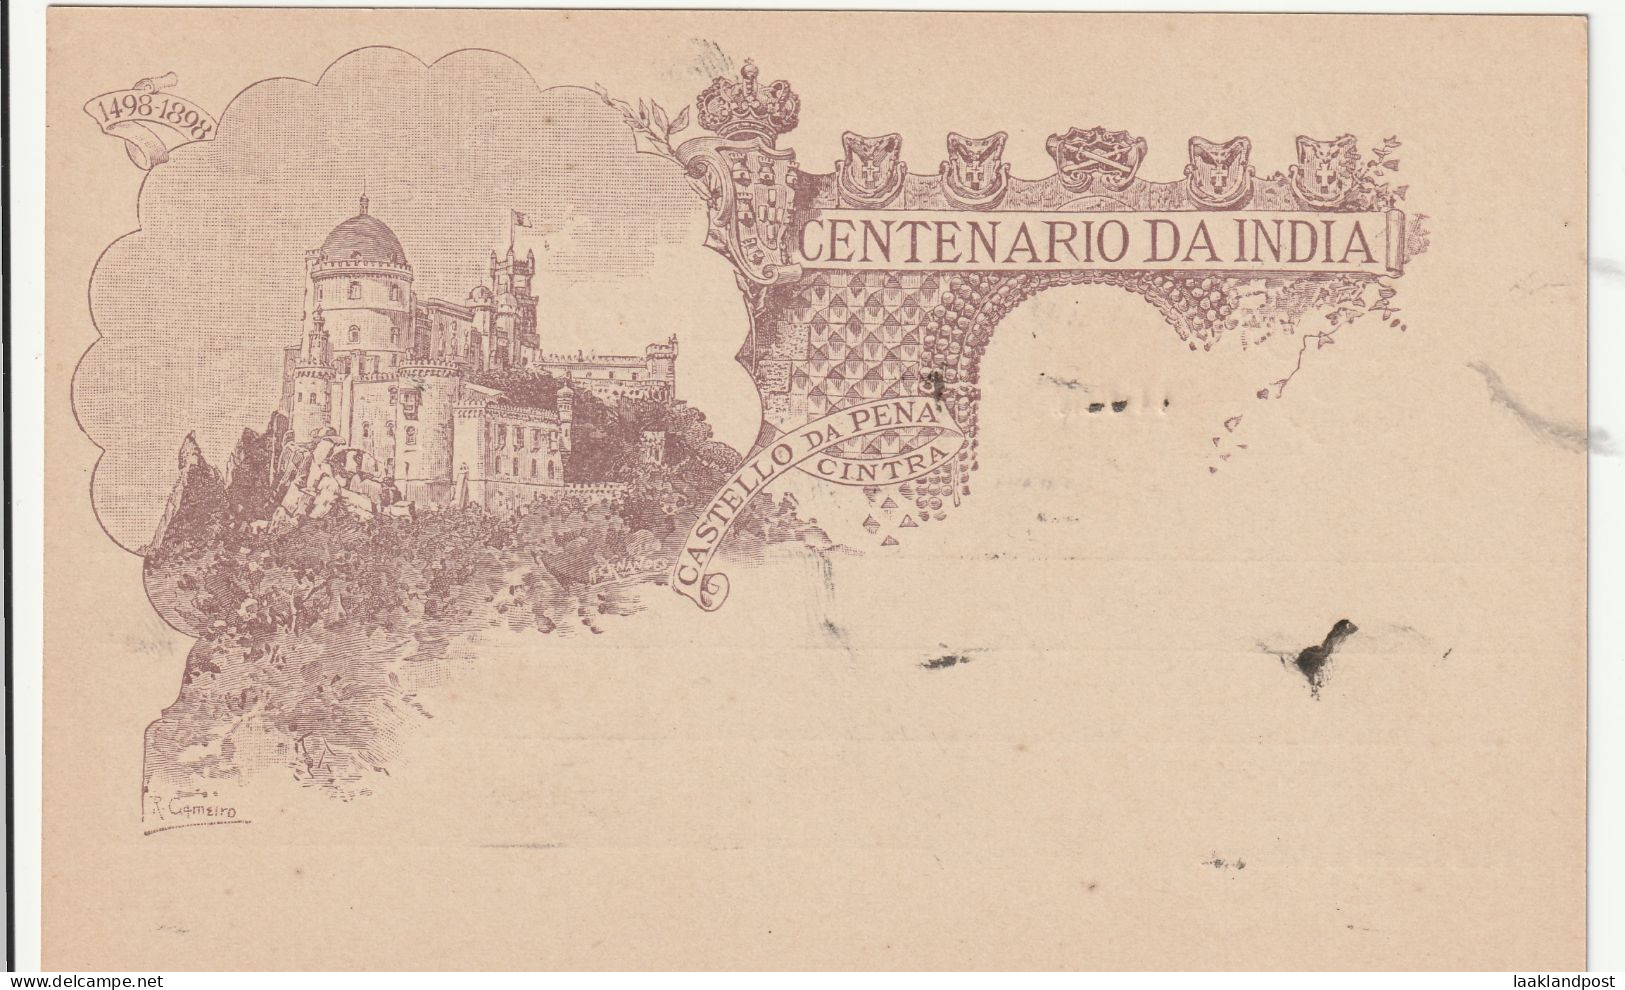 Portugiesisch Afrika 1898 Illustrated Postcard, 20 Reis, Vasco Da Gama, "Castello Da Pena Centra "unused - Portuguese Africa